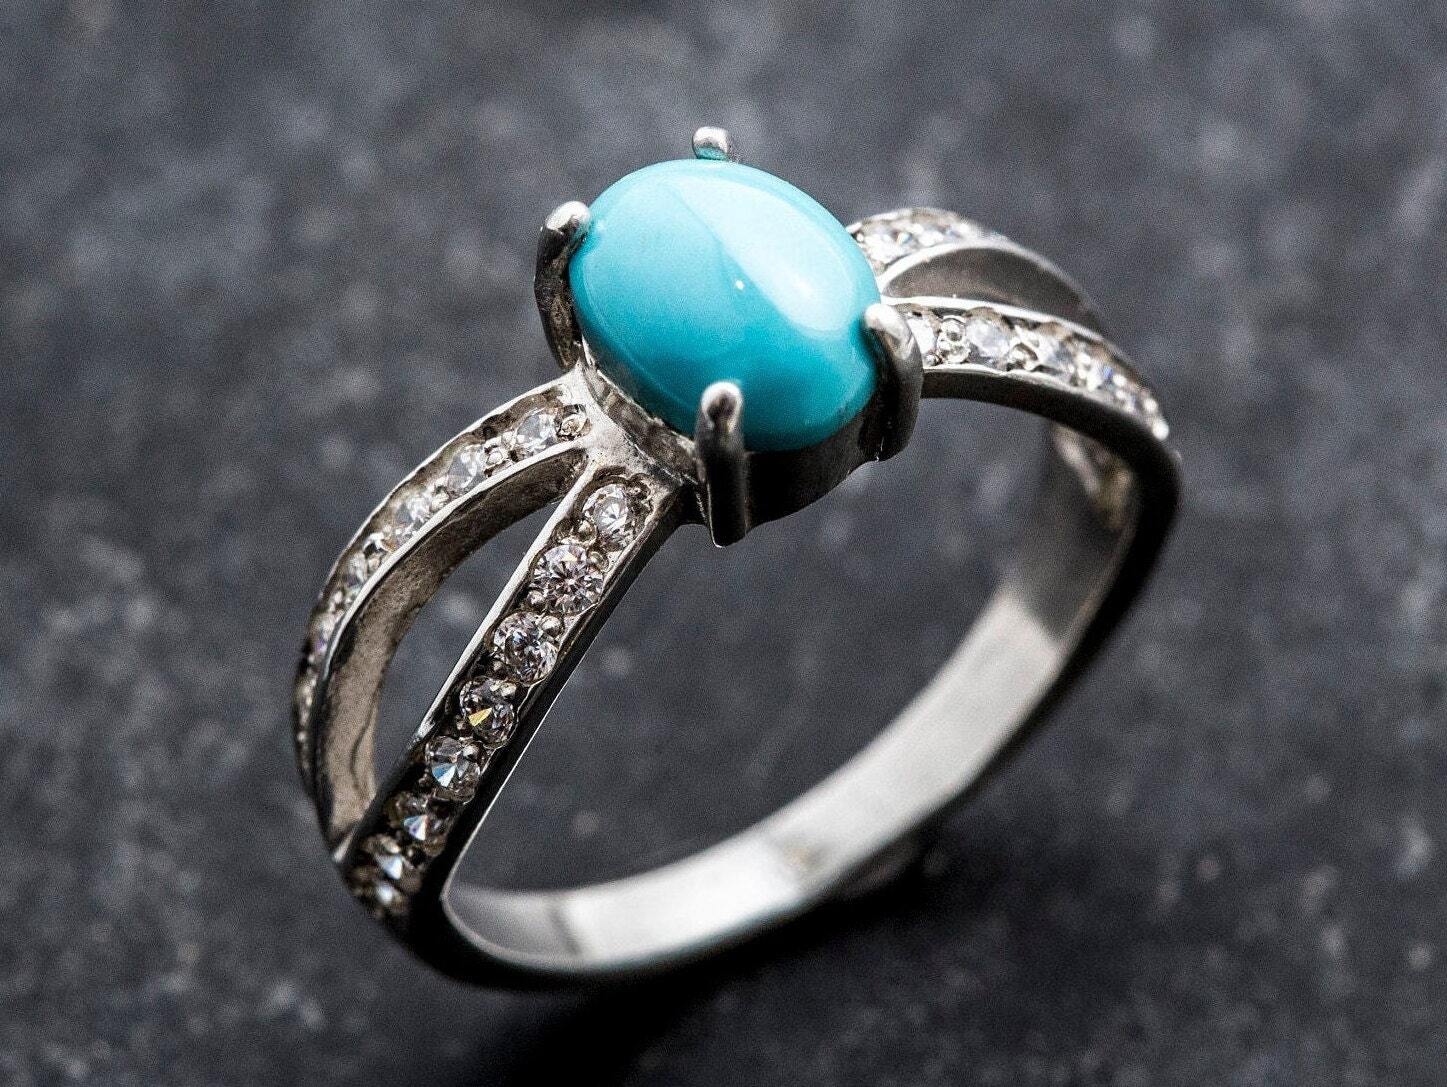 Blue Promise Ring, Turquoise Ring, Natural Turquoise, Sleeping Beauty Gem, Vintage Rings, Arizona Turquoise, Solid Silver Ring, Turquoise